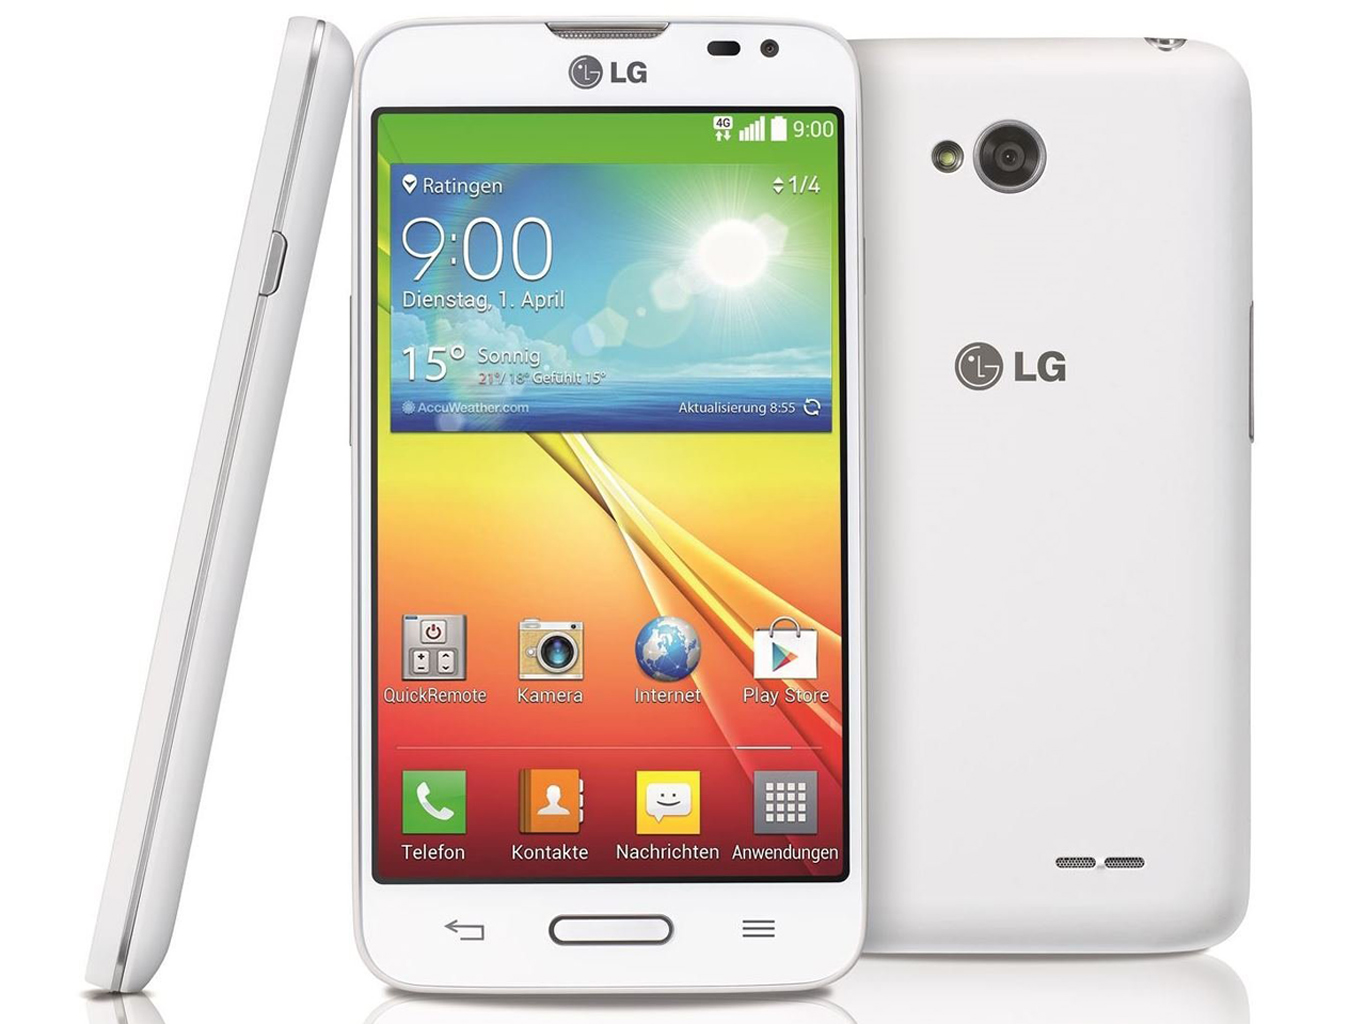 Breve análisis del Smartphone LG L70 - Notebookcheck.org